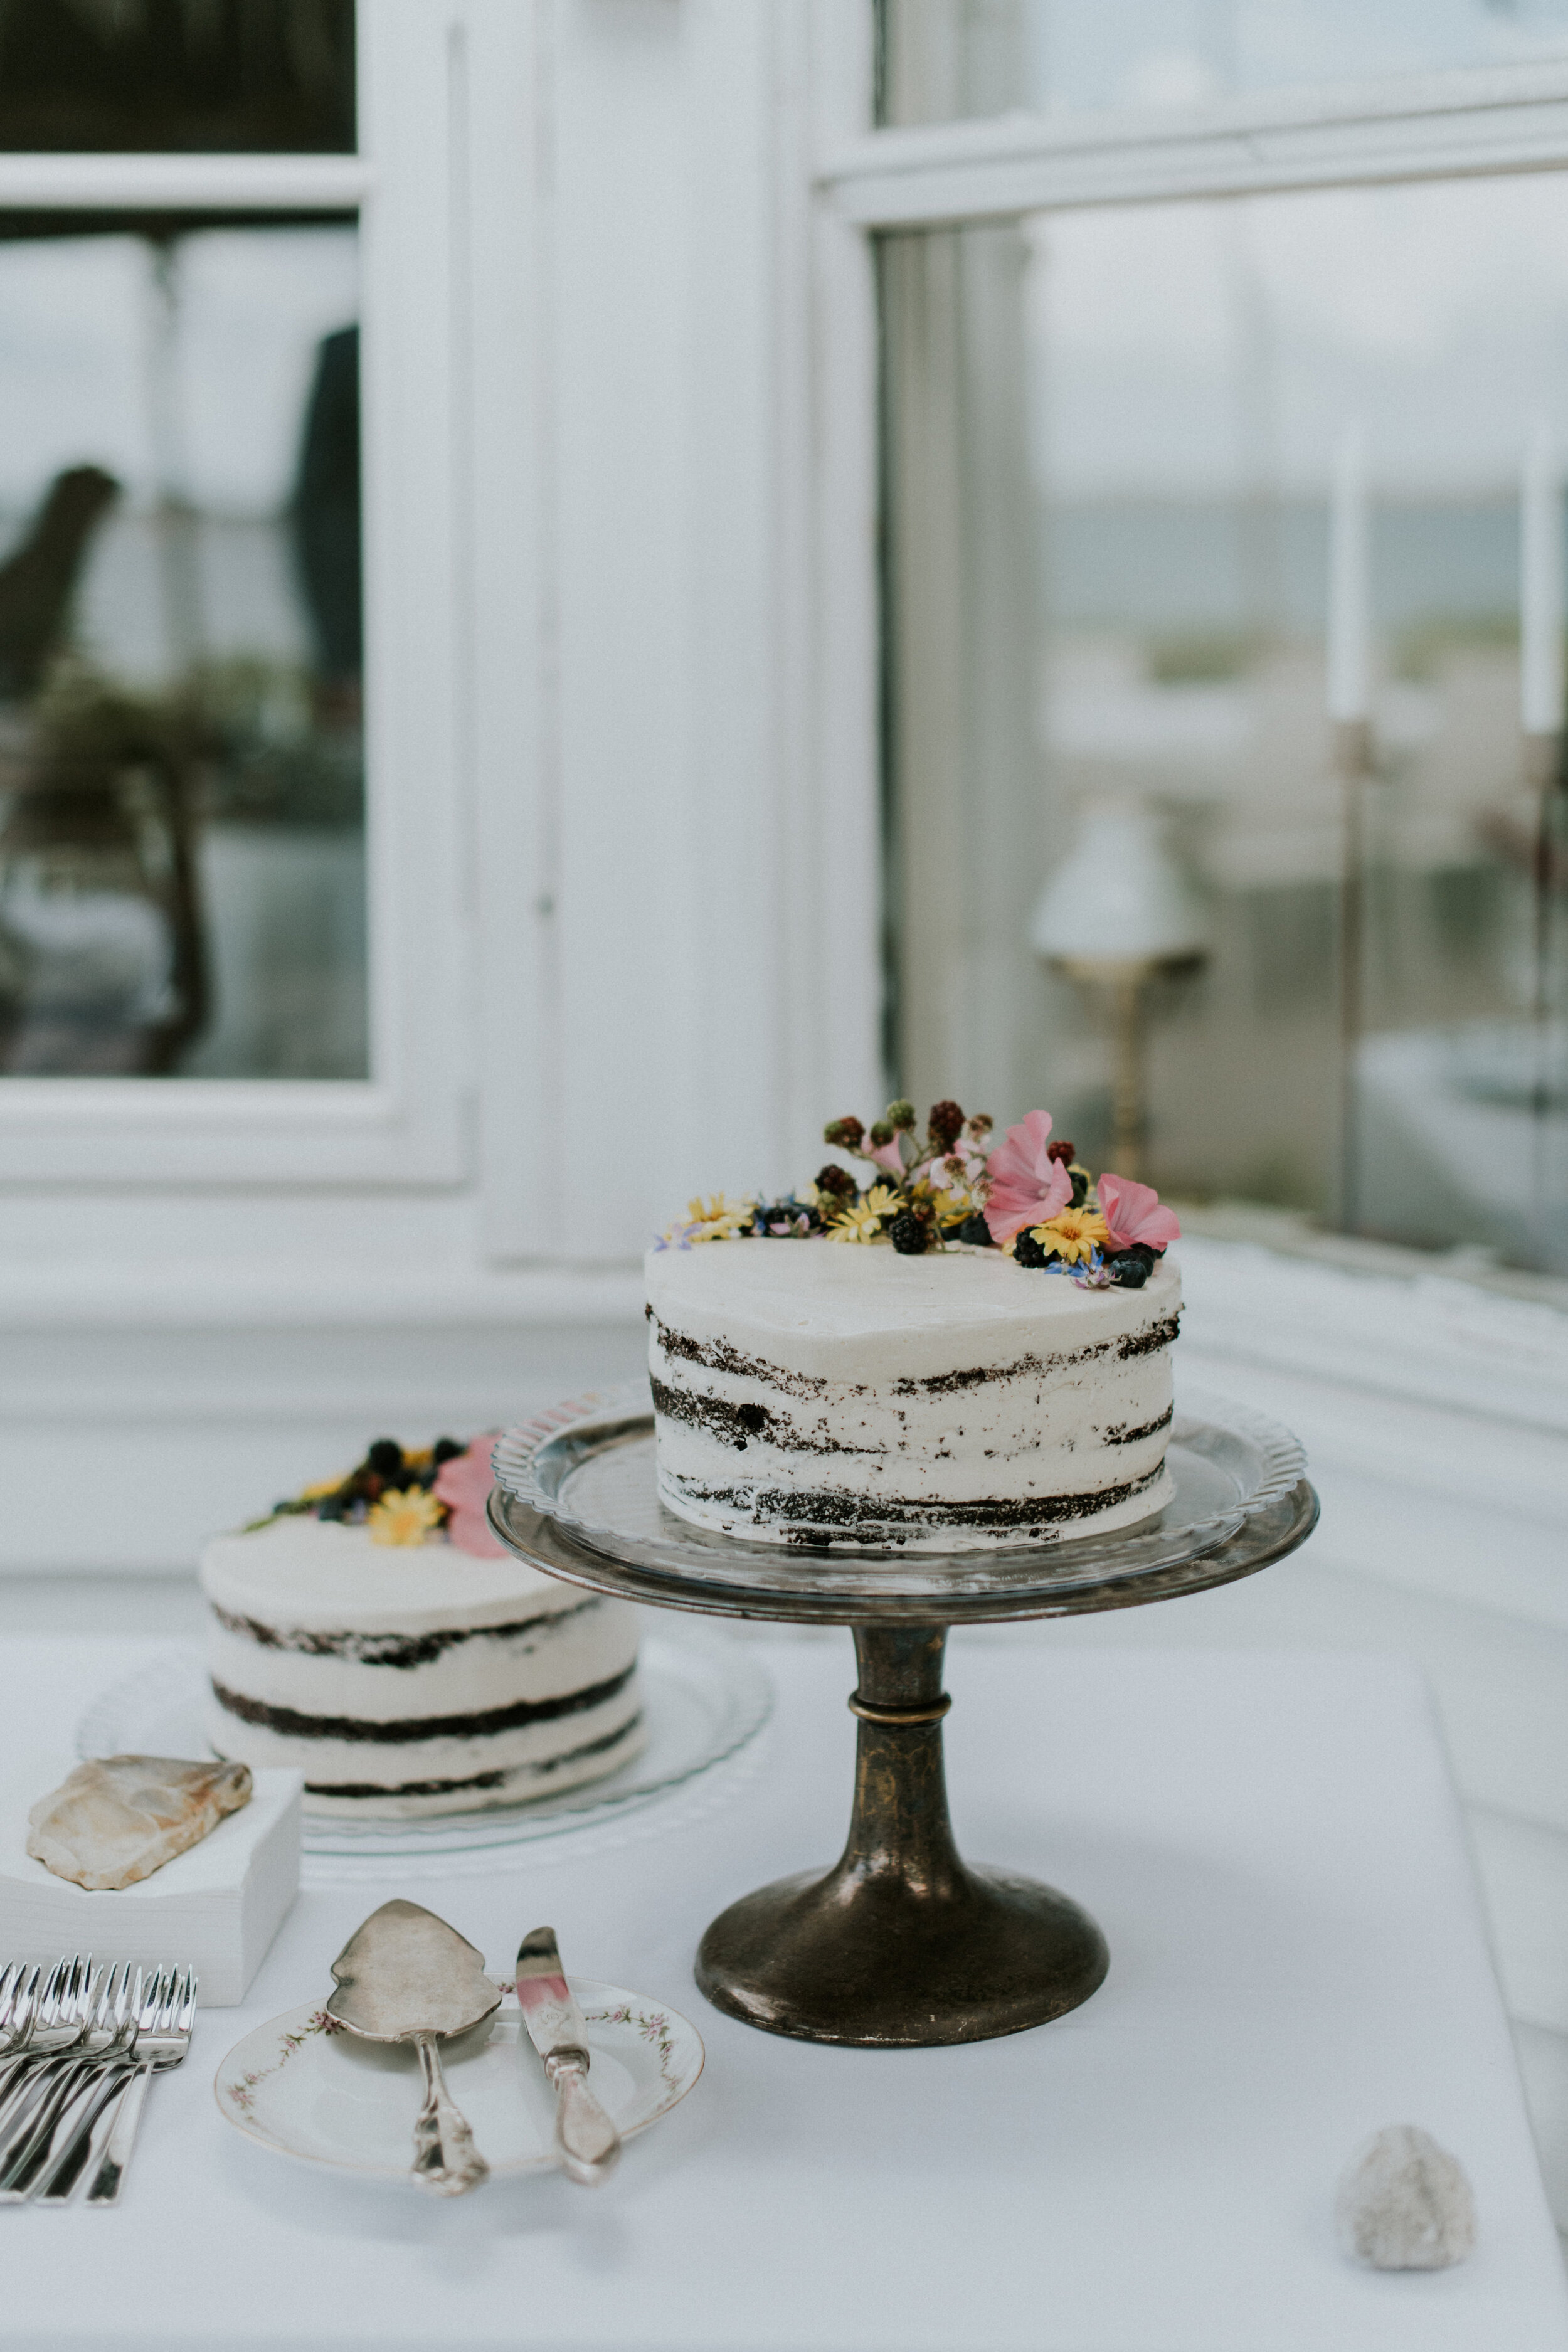 Rustic “naked” wedding cake with berries &amp; flowers | full-service destination wedding | get married in Denmark | Aero Island | Danish Island Weddings | Denmark wedding planners and venue